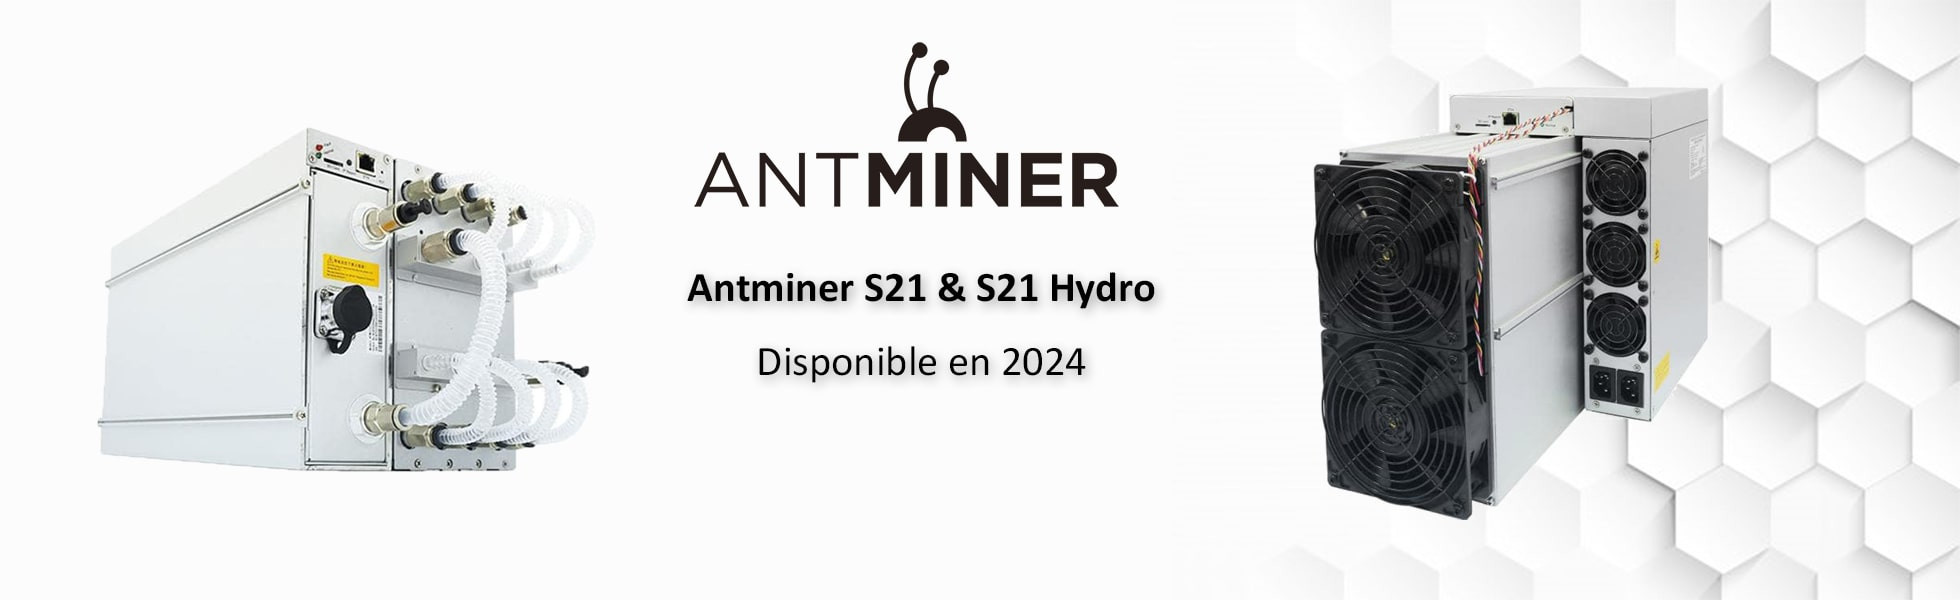 Der Bitcoin-Asic Antminer S21 & S21 Hydro